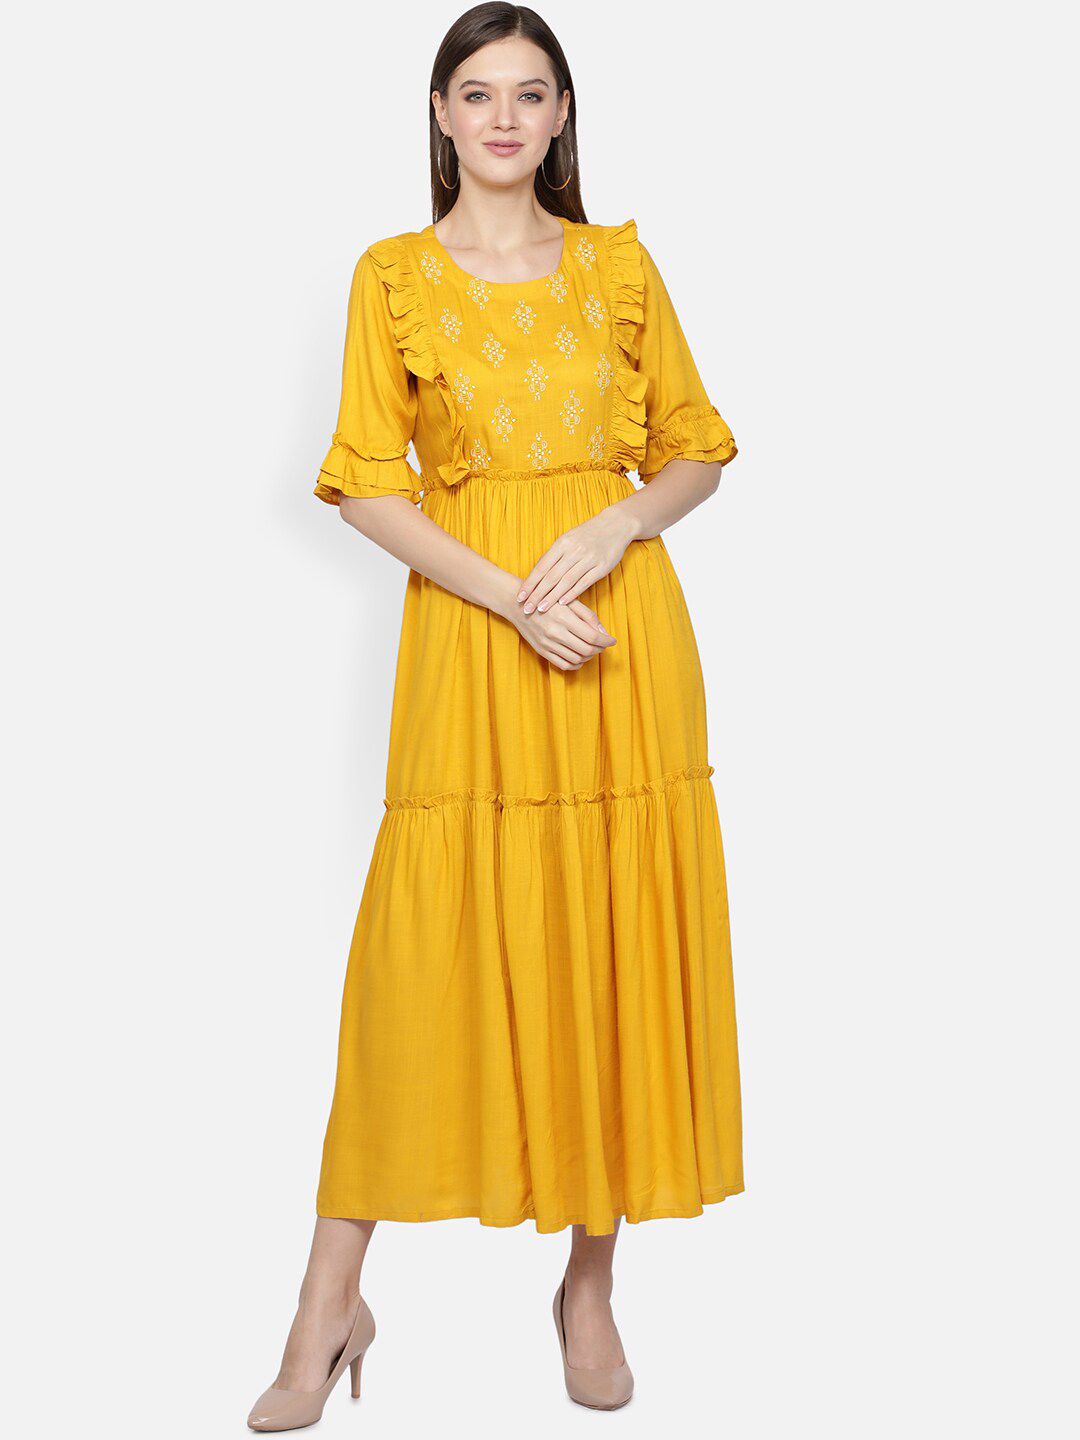 DESI WOMANIYA Mustard Yellow Embroidered Maxi Dress Price in India